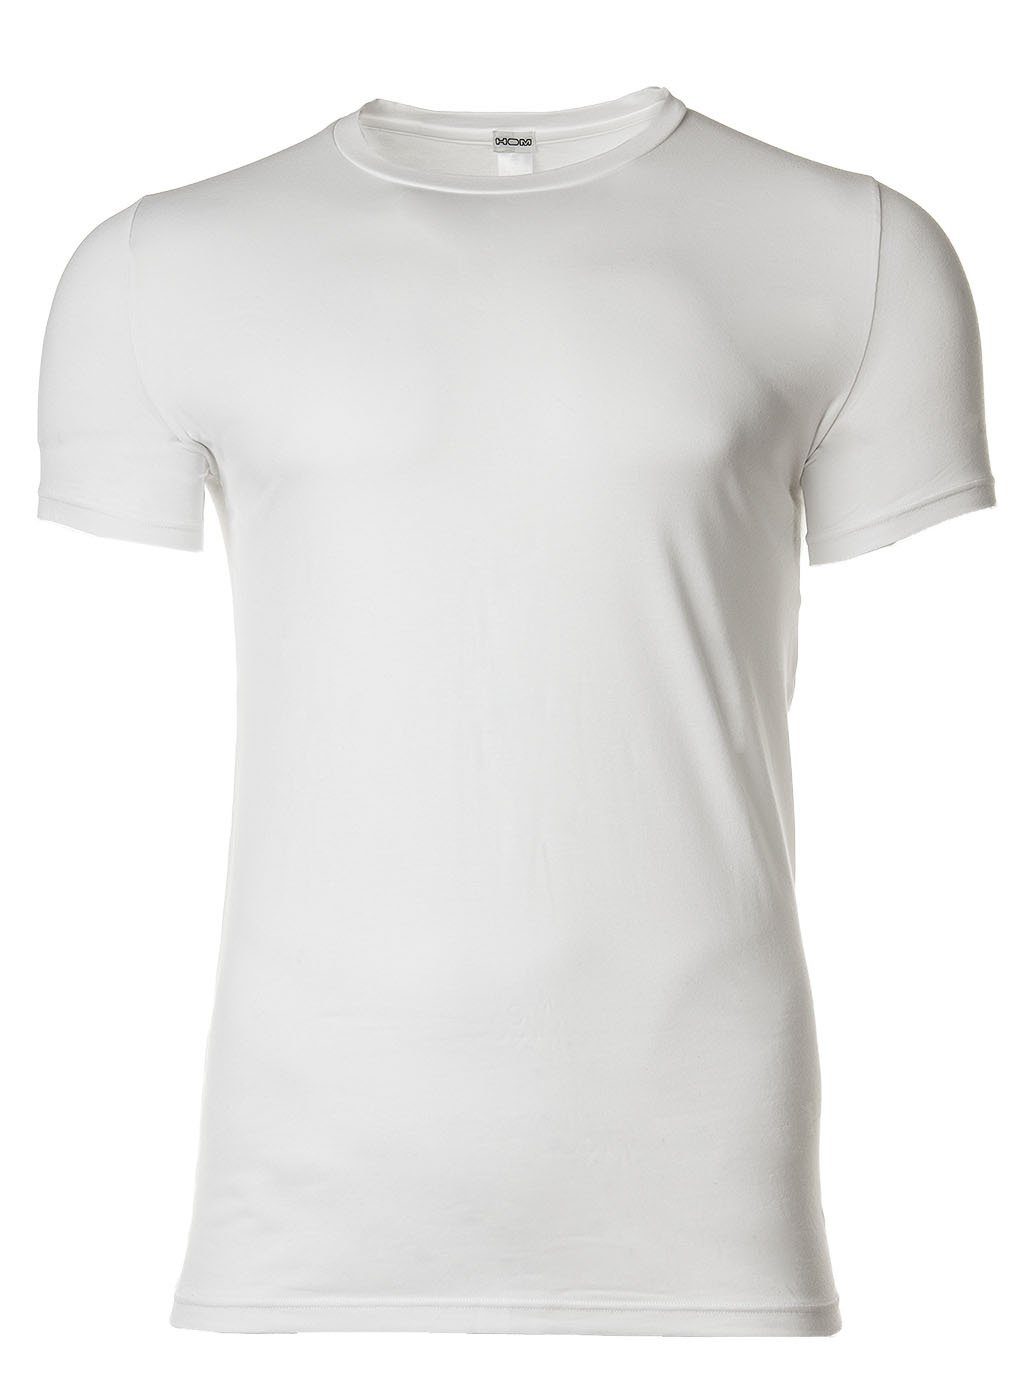 Hom T-Shirt Herren T-Shirt Crew Neck - Tee Shirt Supreme Weiß